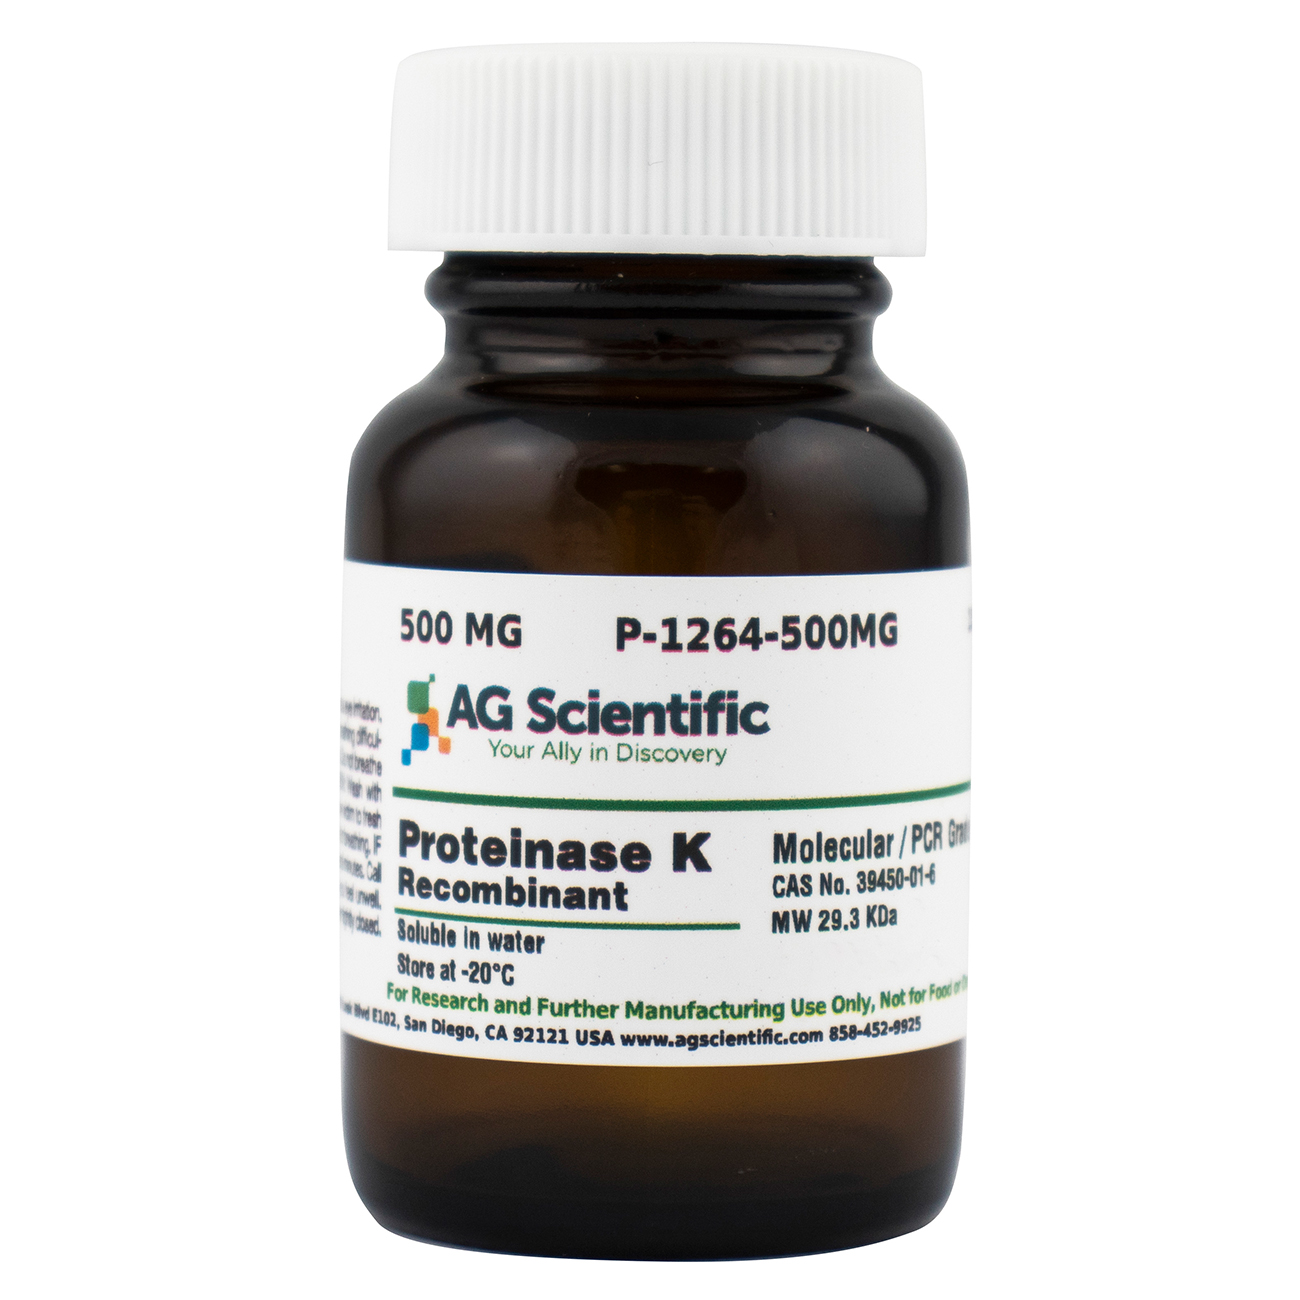 Proteinase K (Recombinant), 500 MG